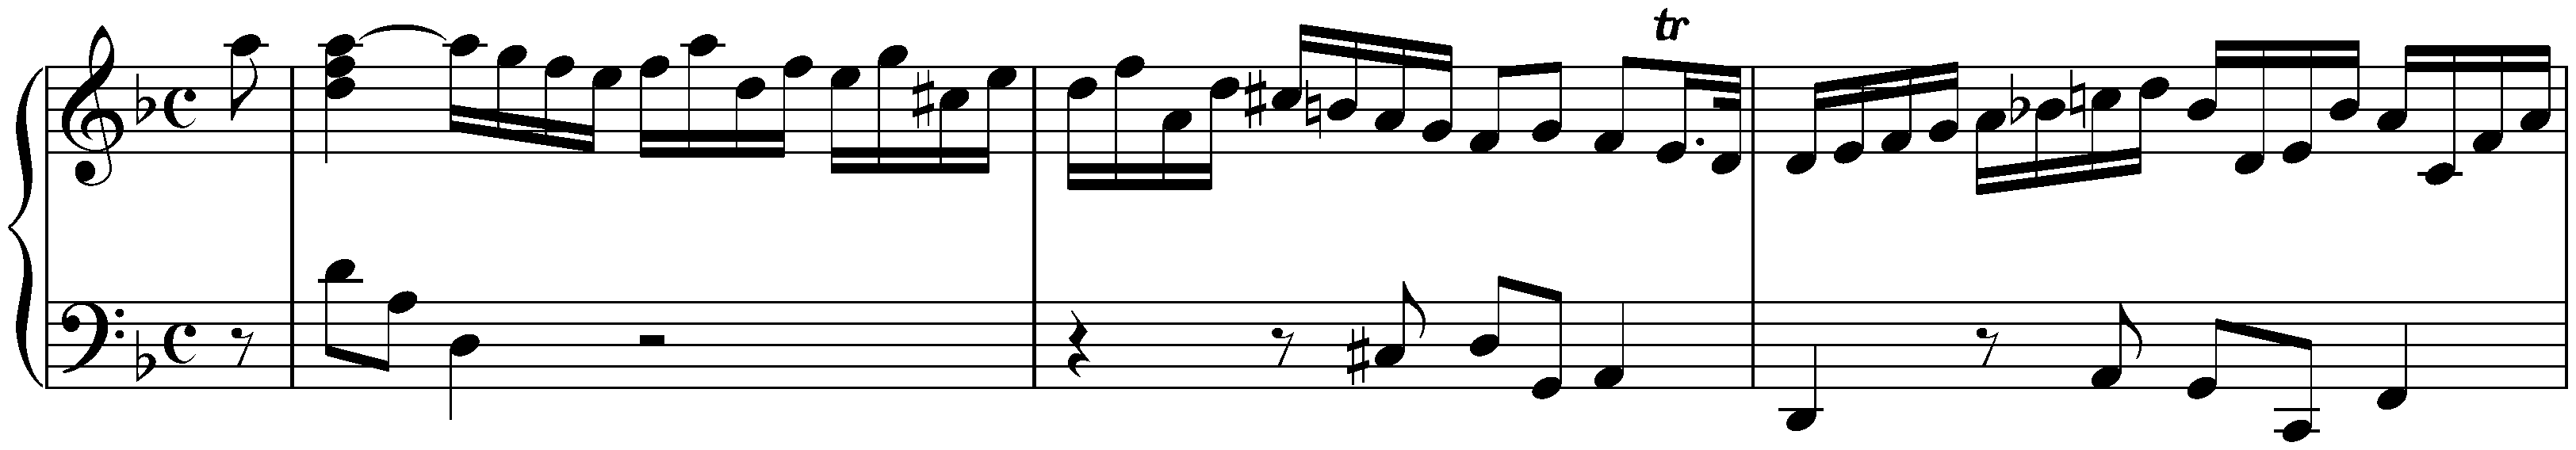 Suite in D minor, HWV 448; 2. Allemande